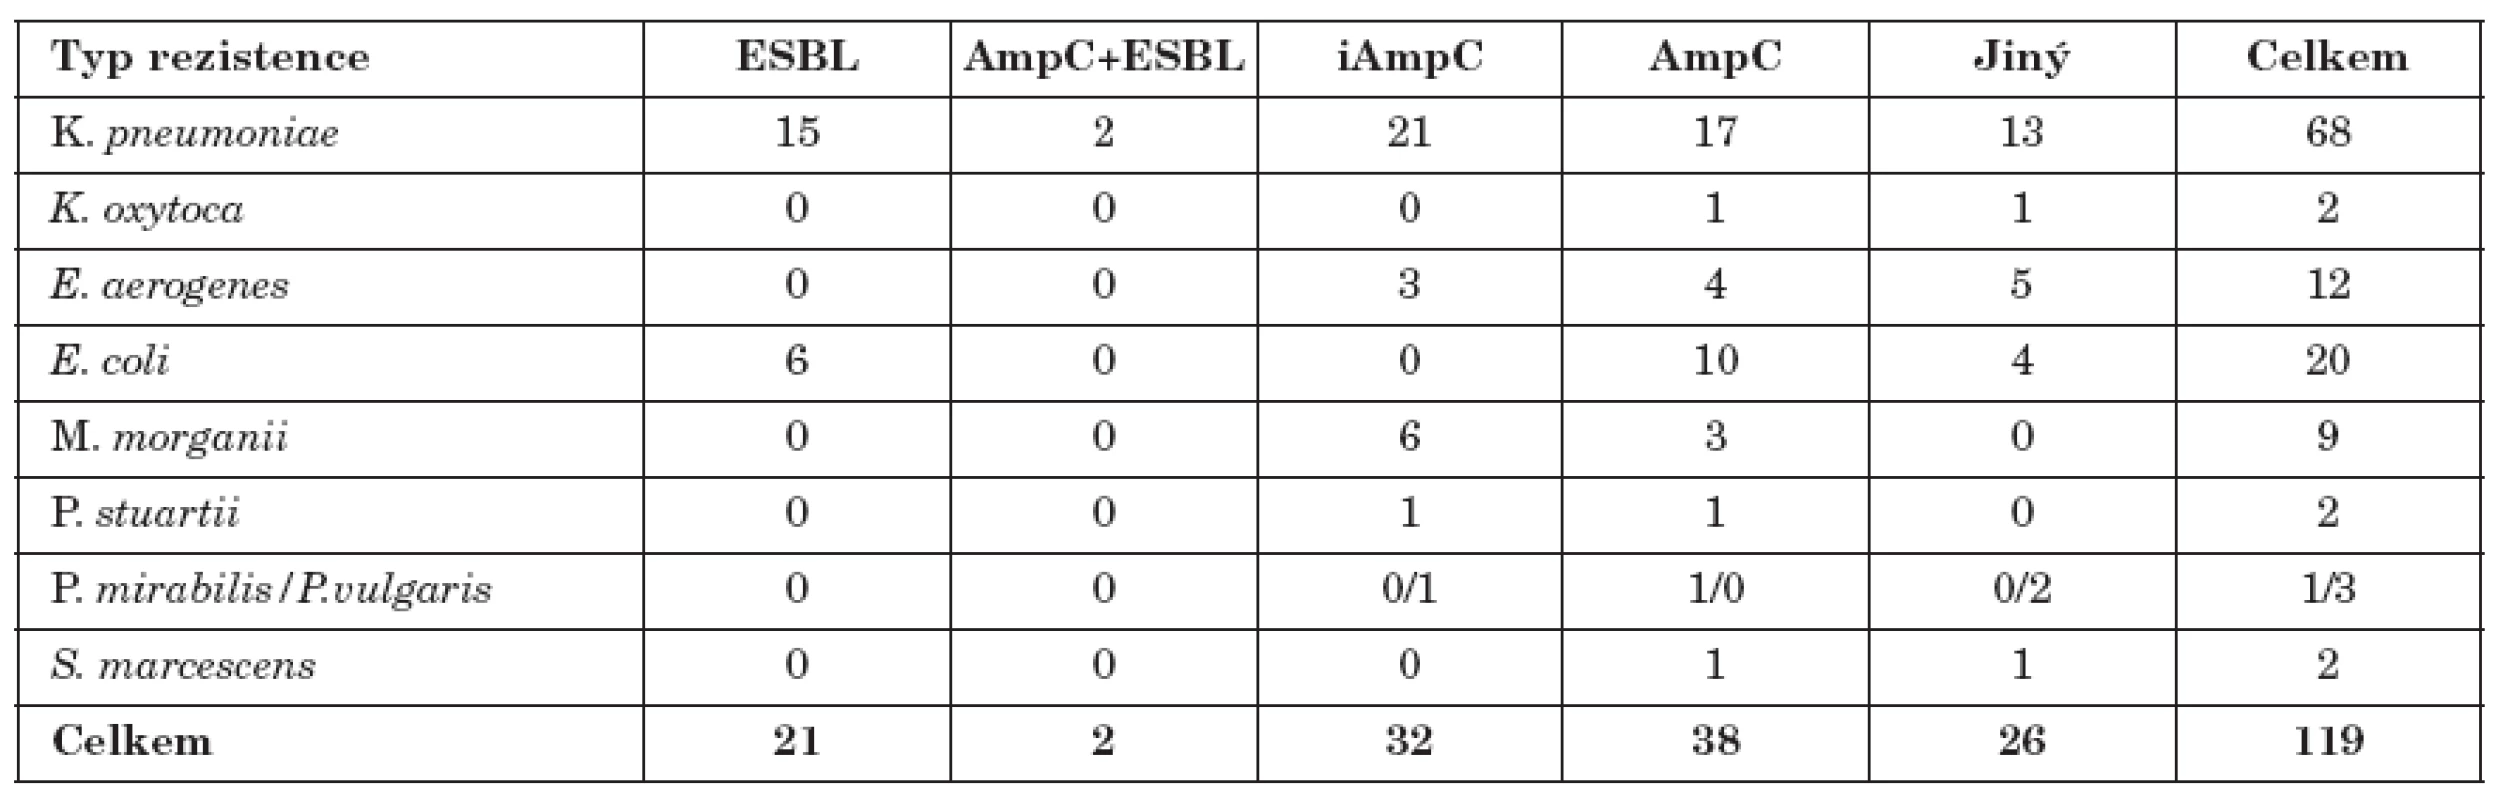 Výskyt iAmpC, AmpC, ESBL a kombinovaných typů citlivosti u gramnegativních bakterií
Table 1. Production of iAmpC, AmpC and ESBL and antibiotic resistance in Gram-negative bacteria
Typ rezistence ESBL AmpC+ESBL iAmpC AmpC Jiný